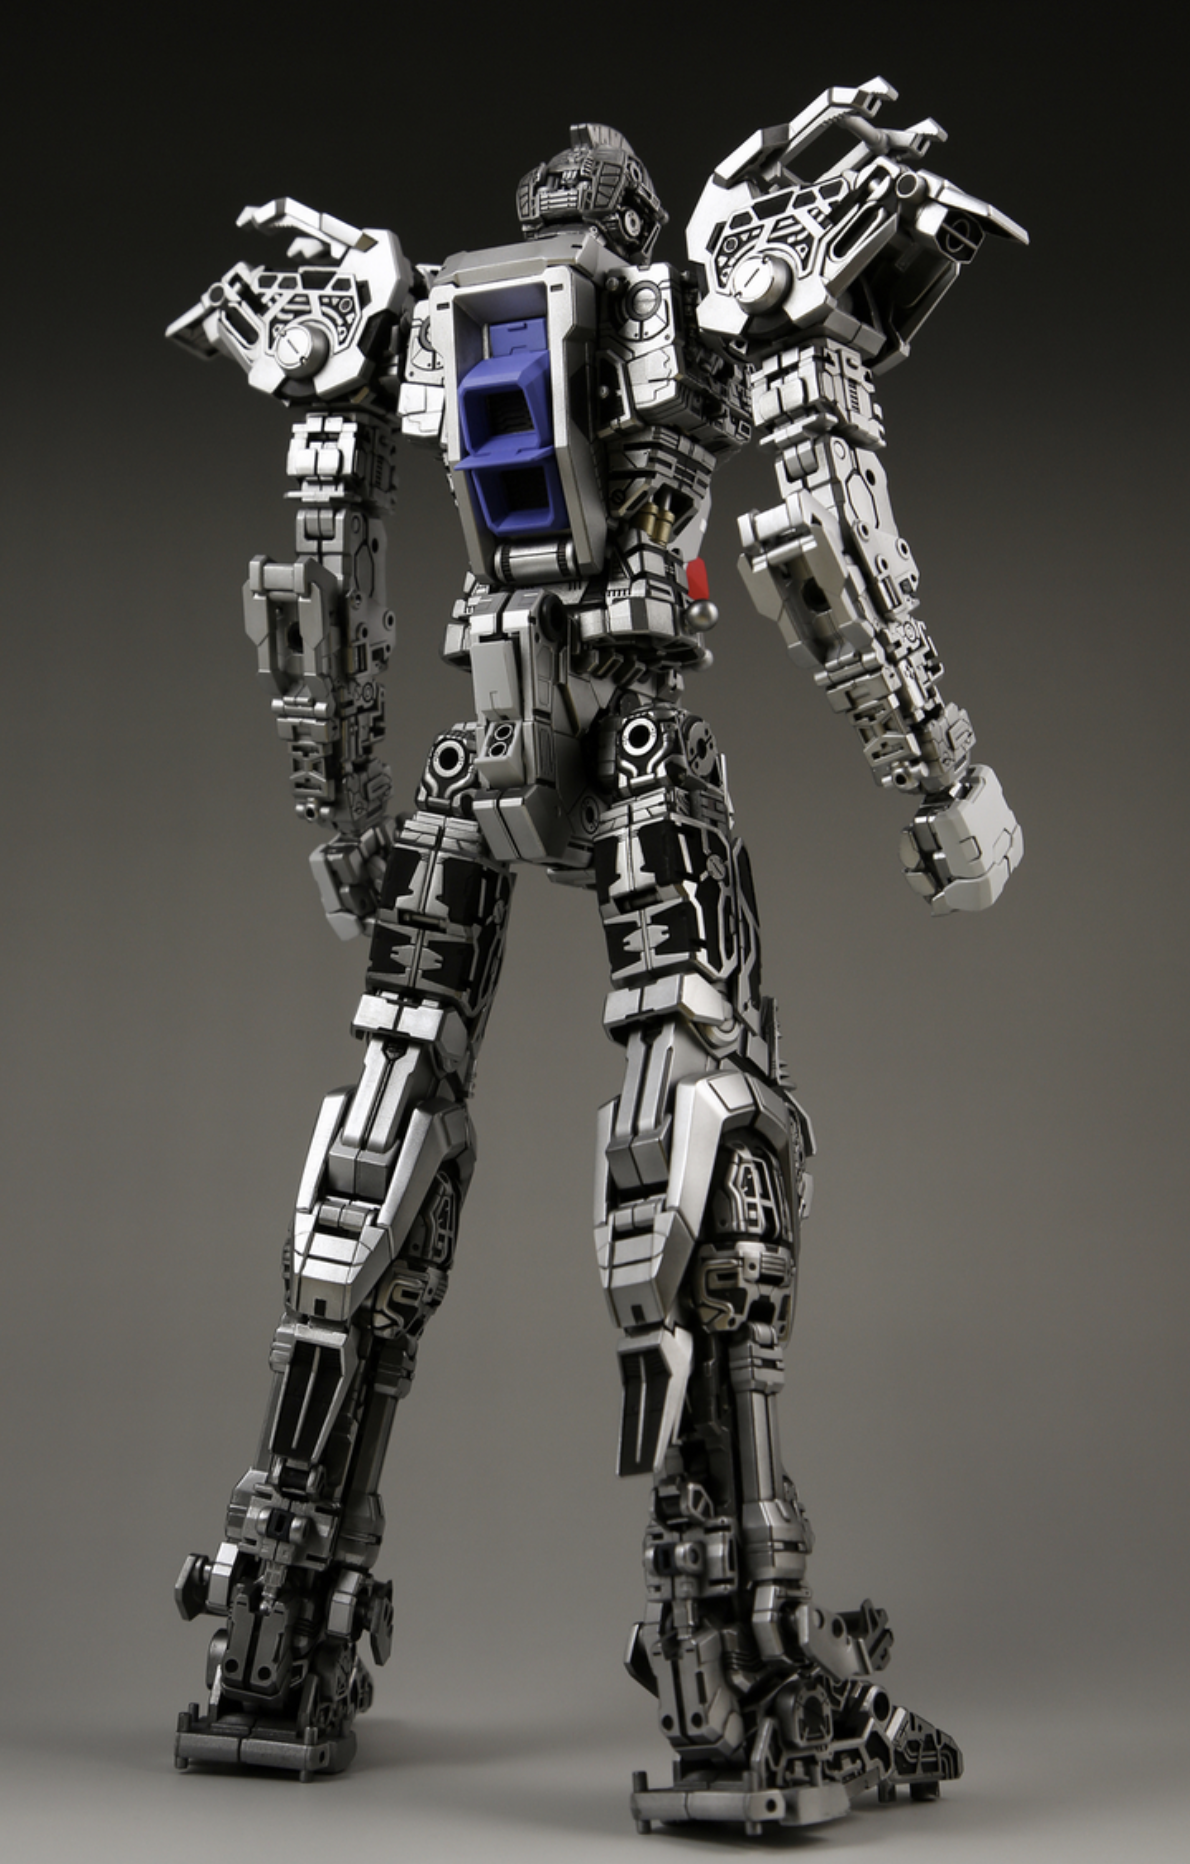 Gundam - Maquette GAT-X105 Strike Gundam O.M.N.I. Enforcer Mobile Suit PG 1/60